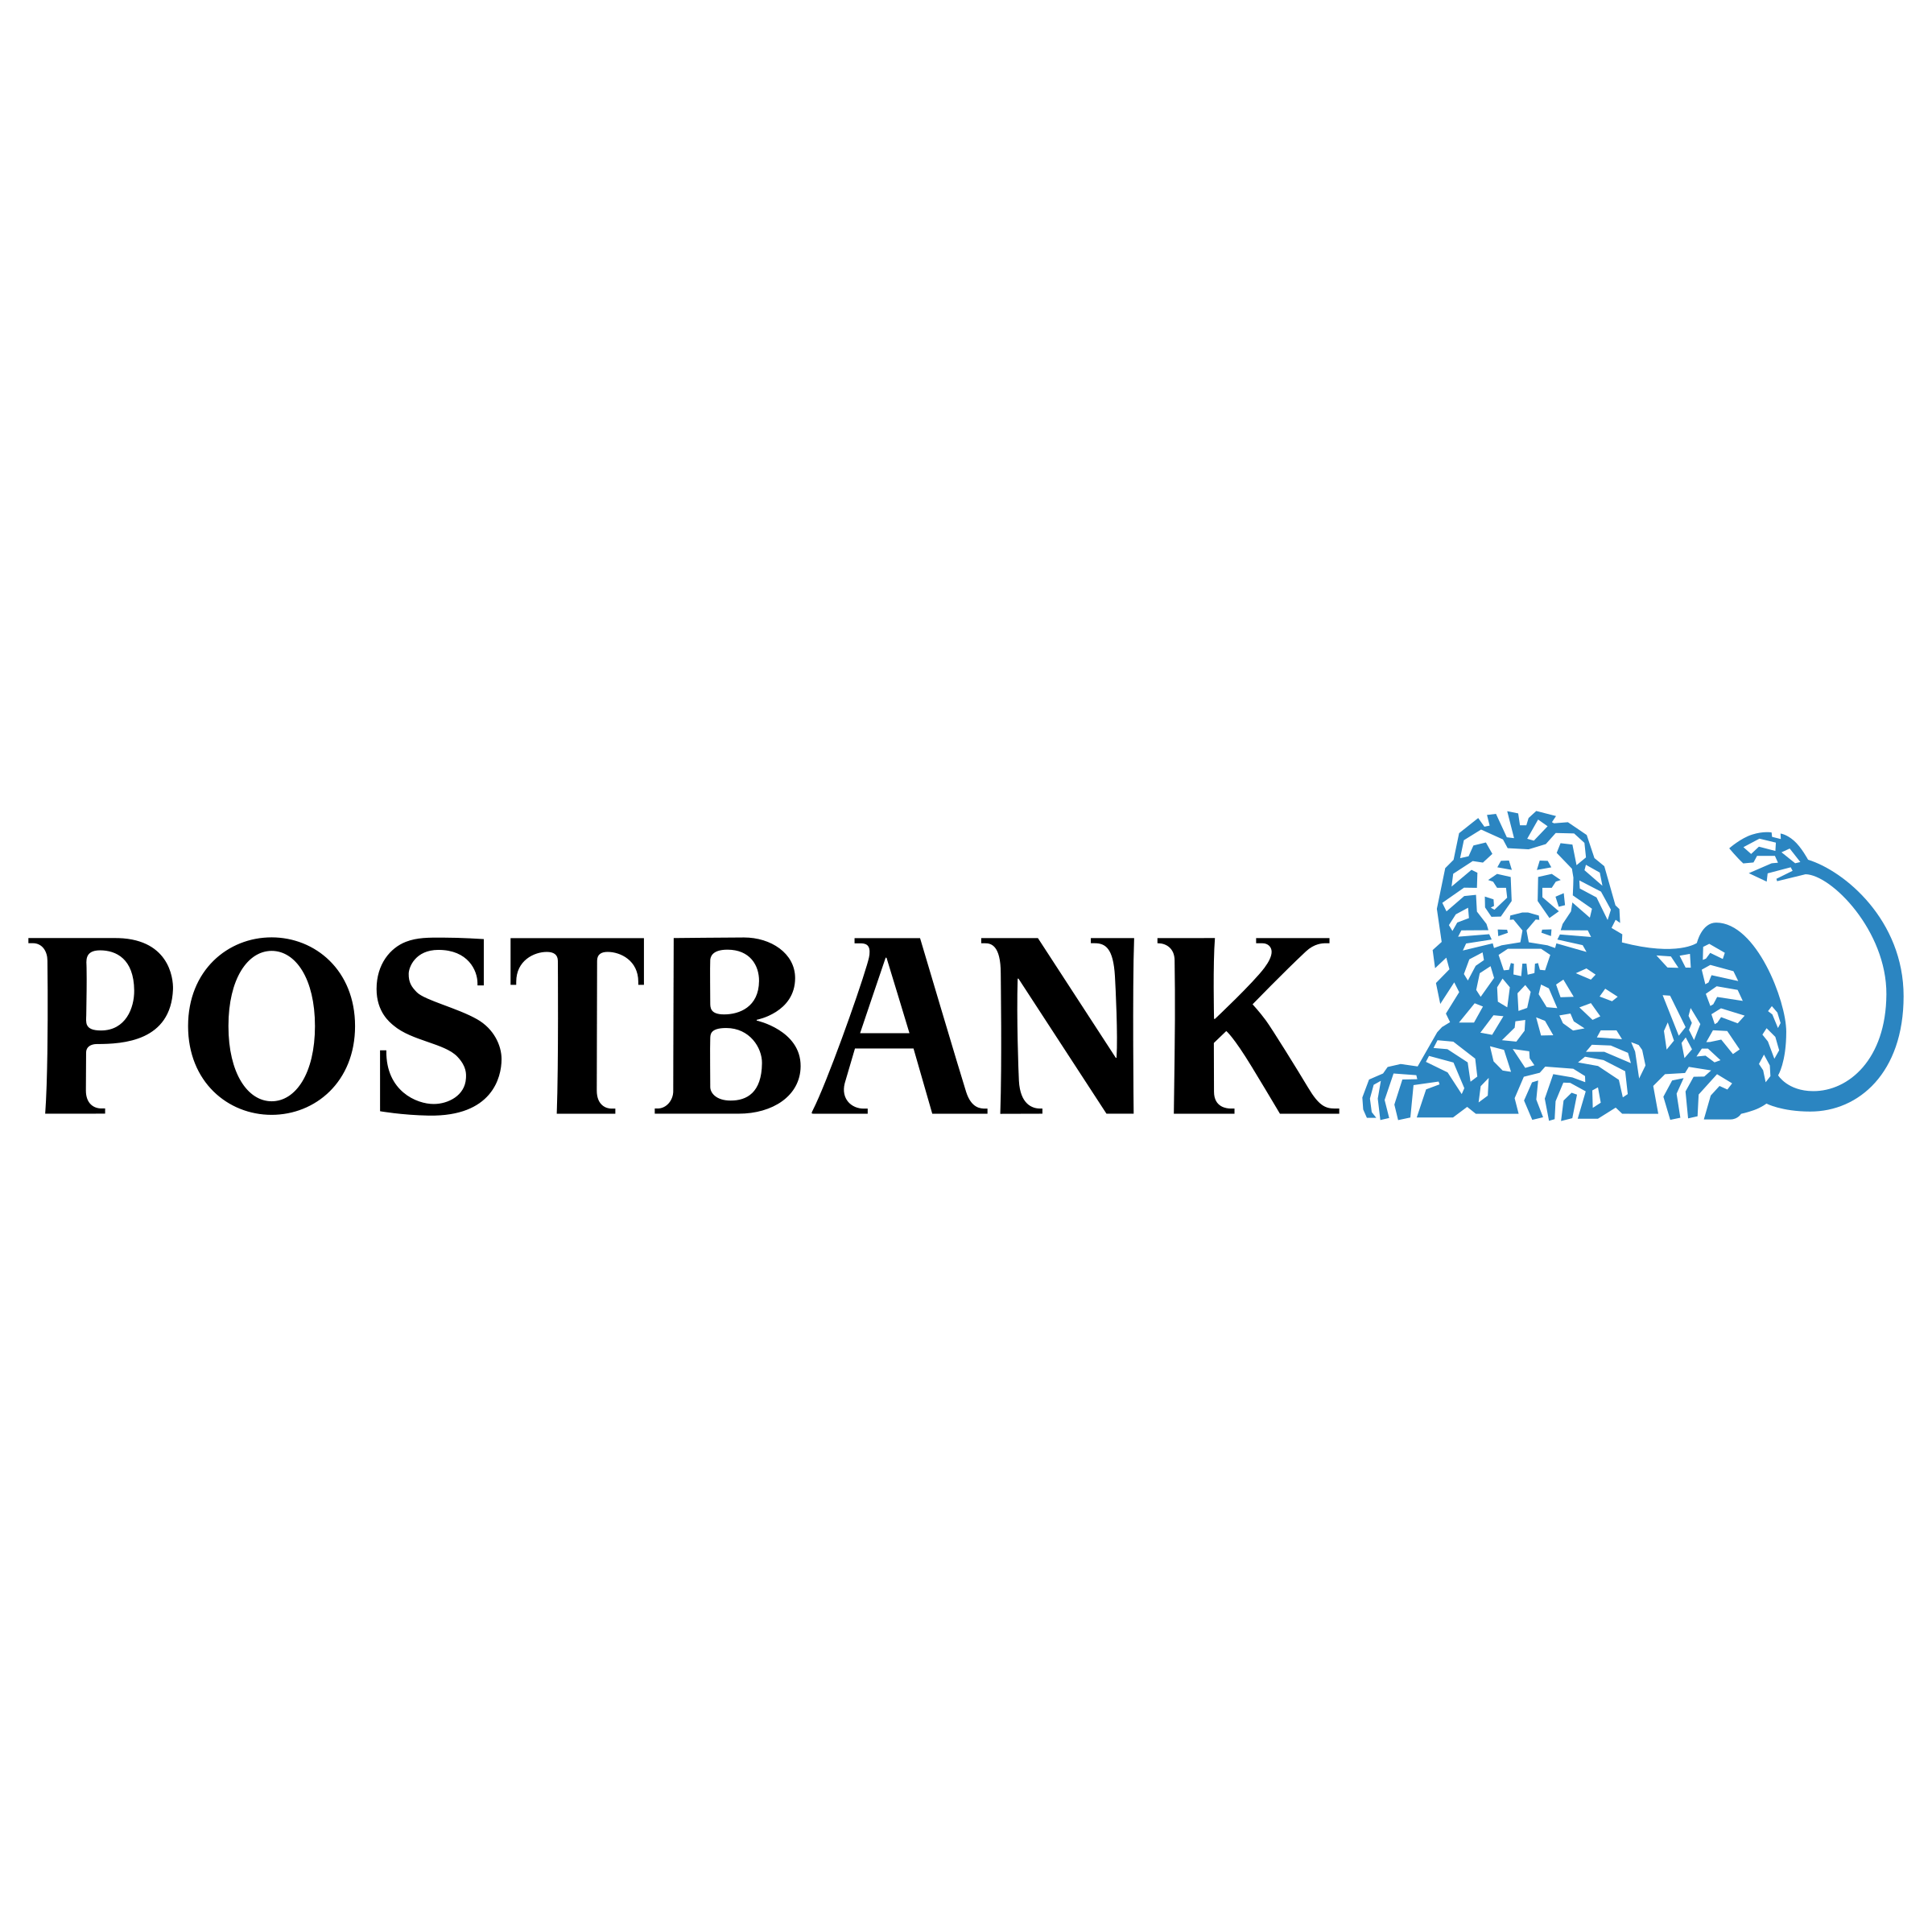 Postbank Logo - Postbank Logo PNG Transparent & SVG Vector